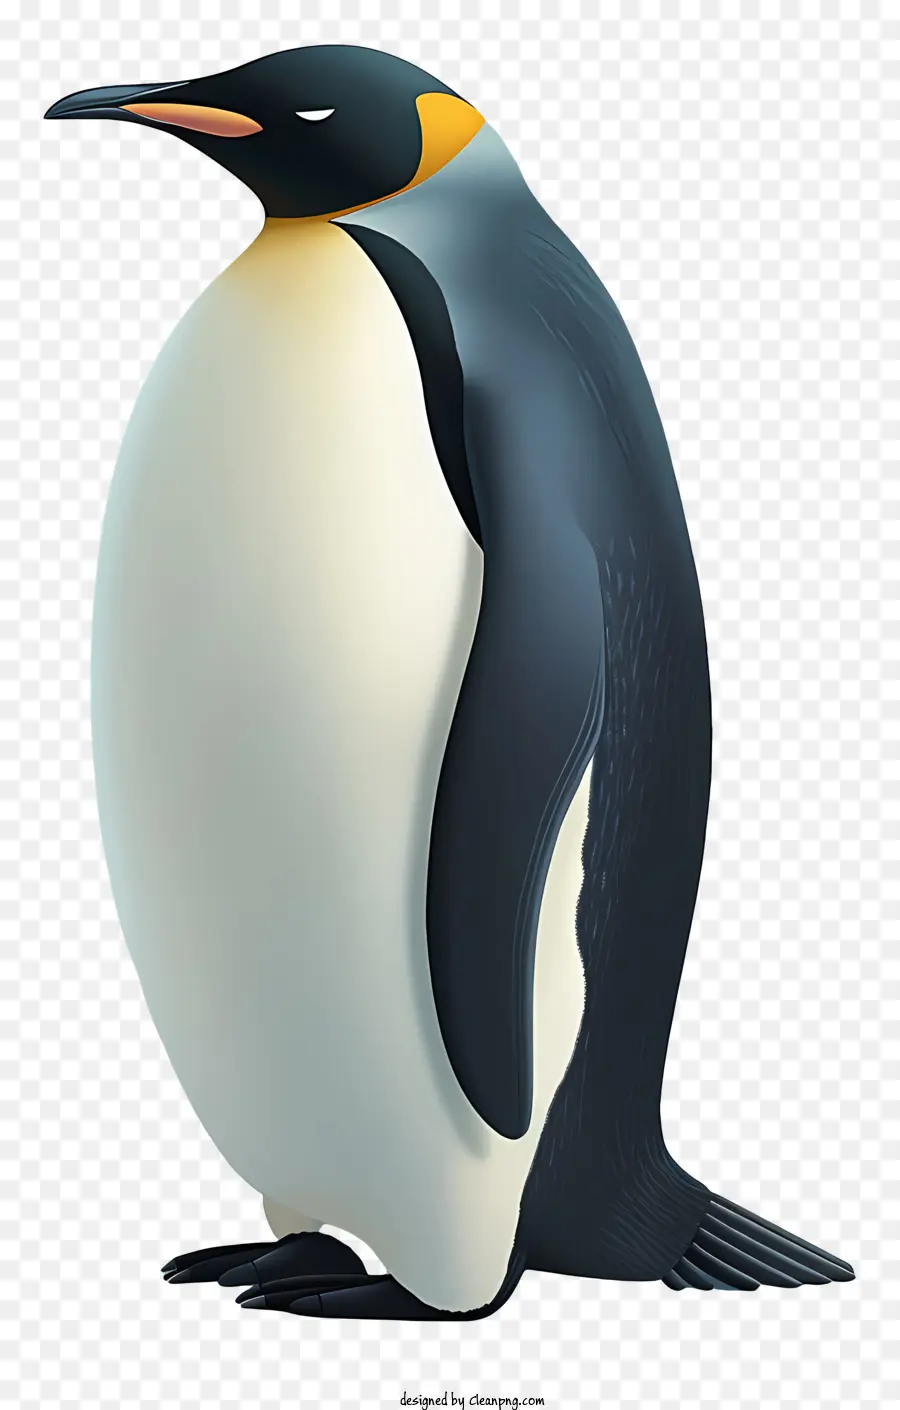 Pinguin - Rotunde Pinguin mit langem Schnabel